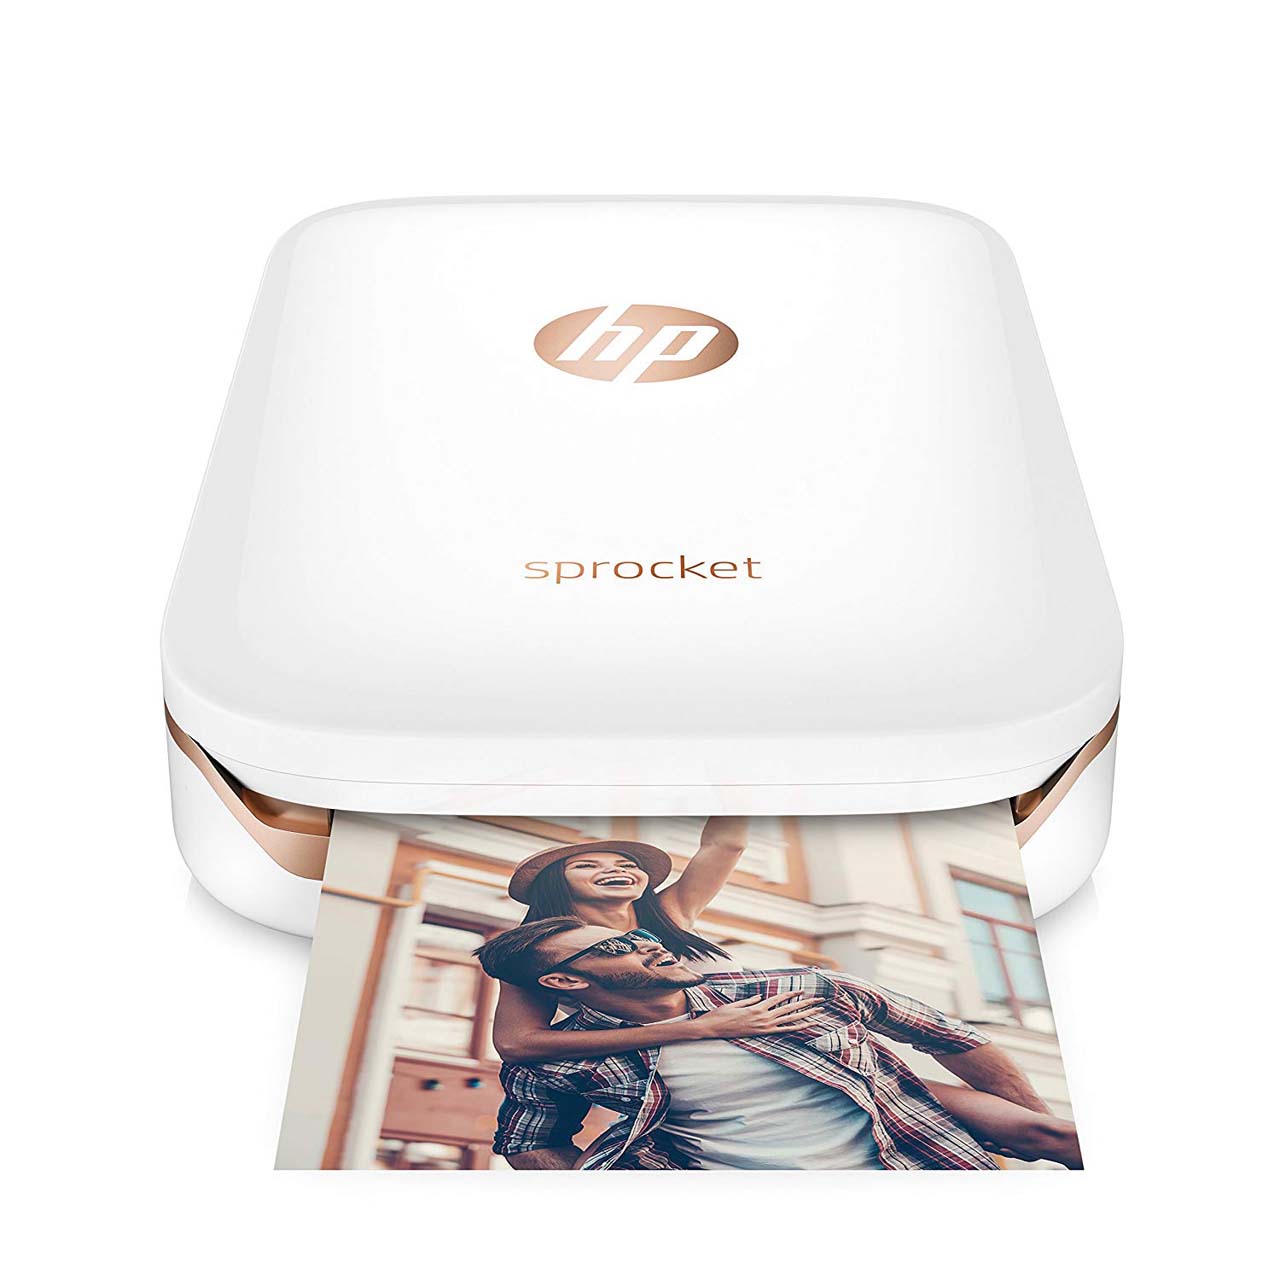 HP Sprocket Select Portable Photo Printer